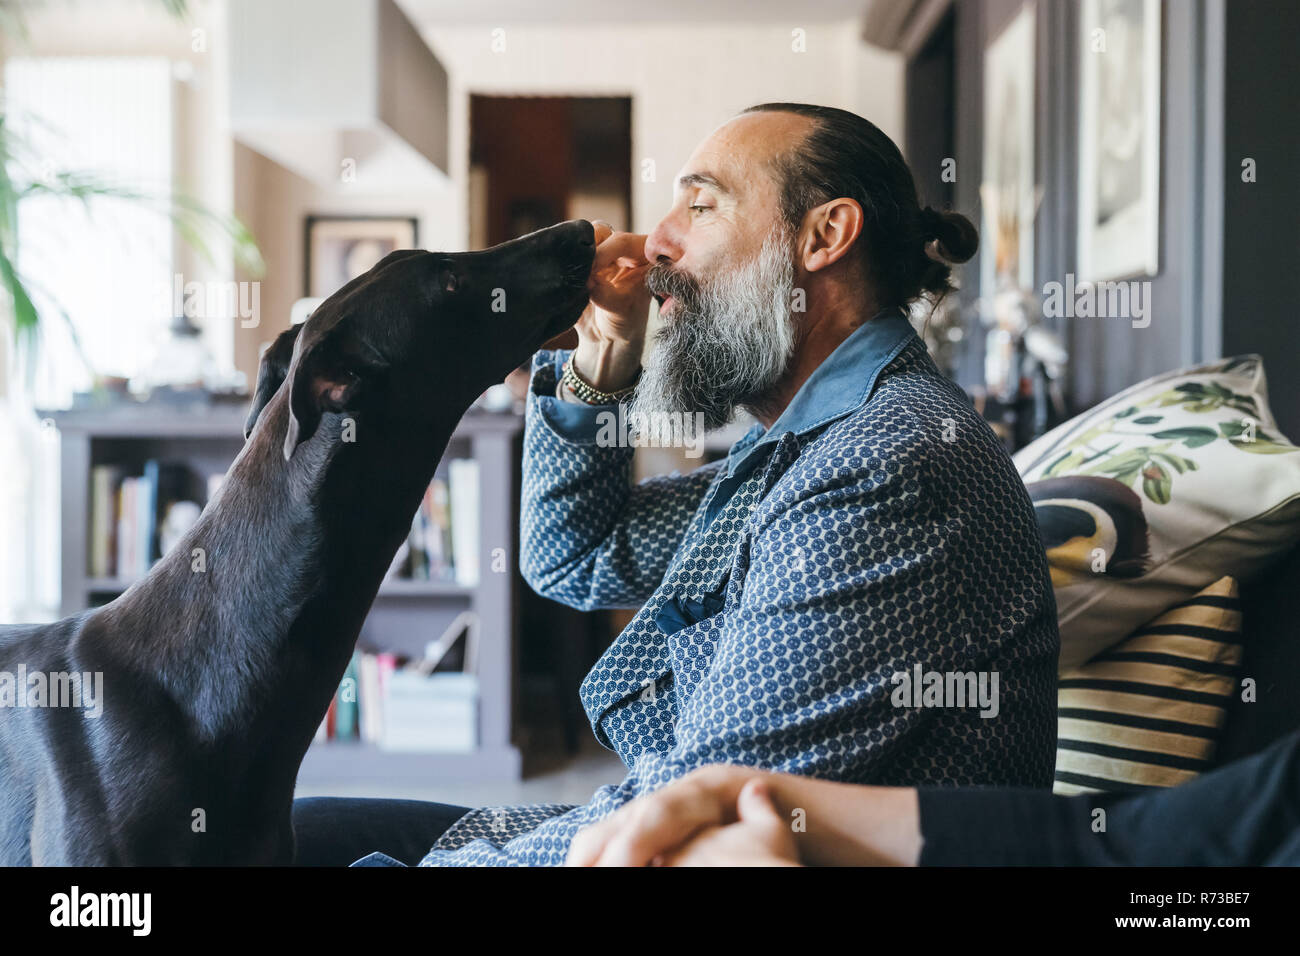 Man giving treat to dog Stock Photo